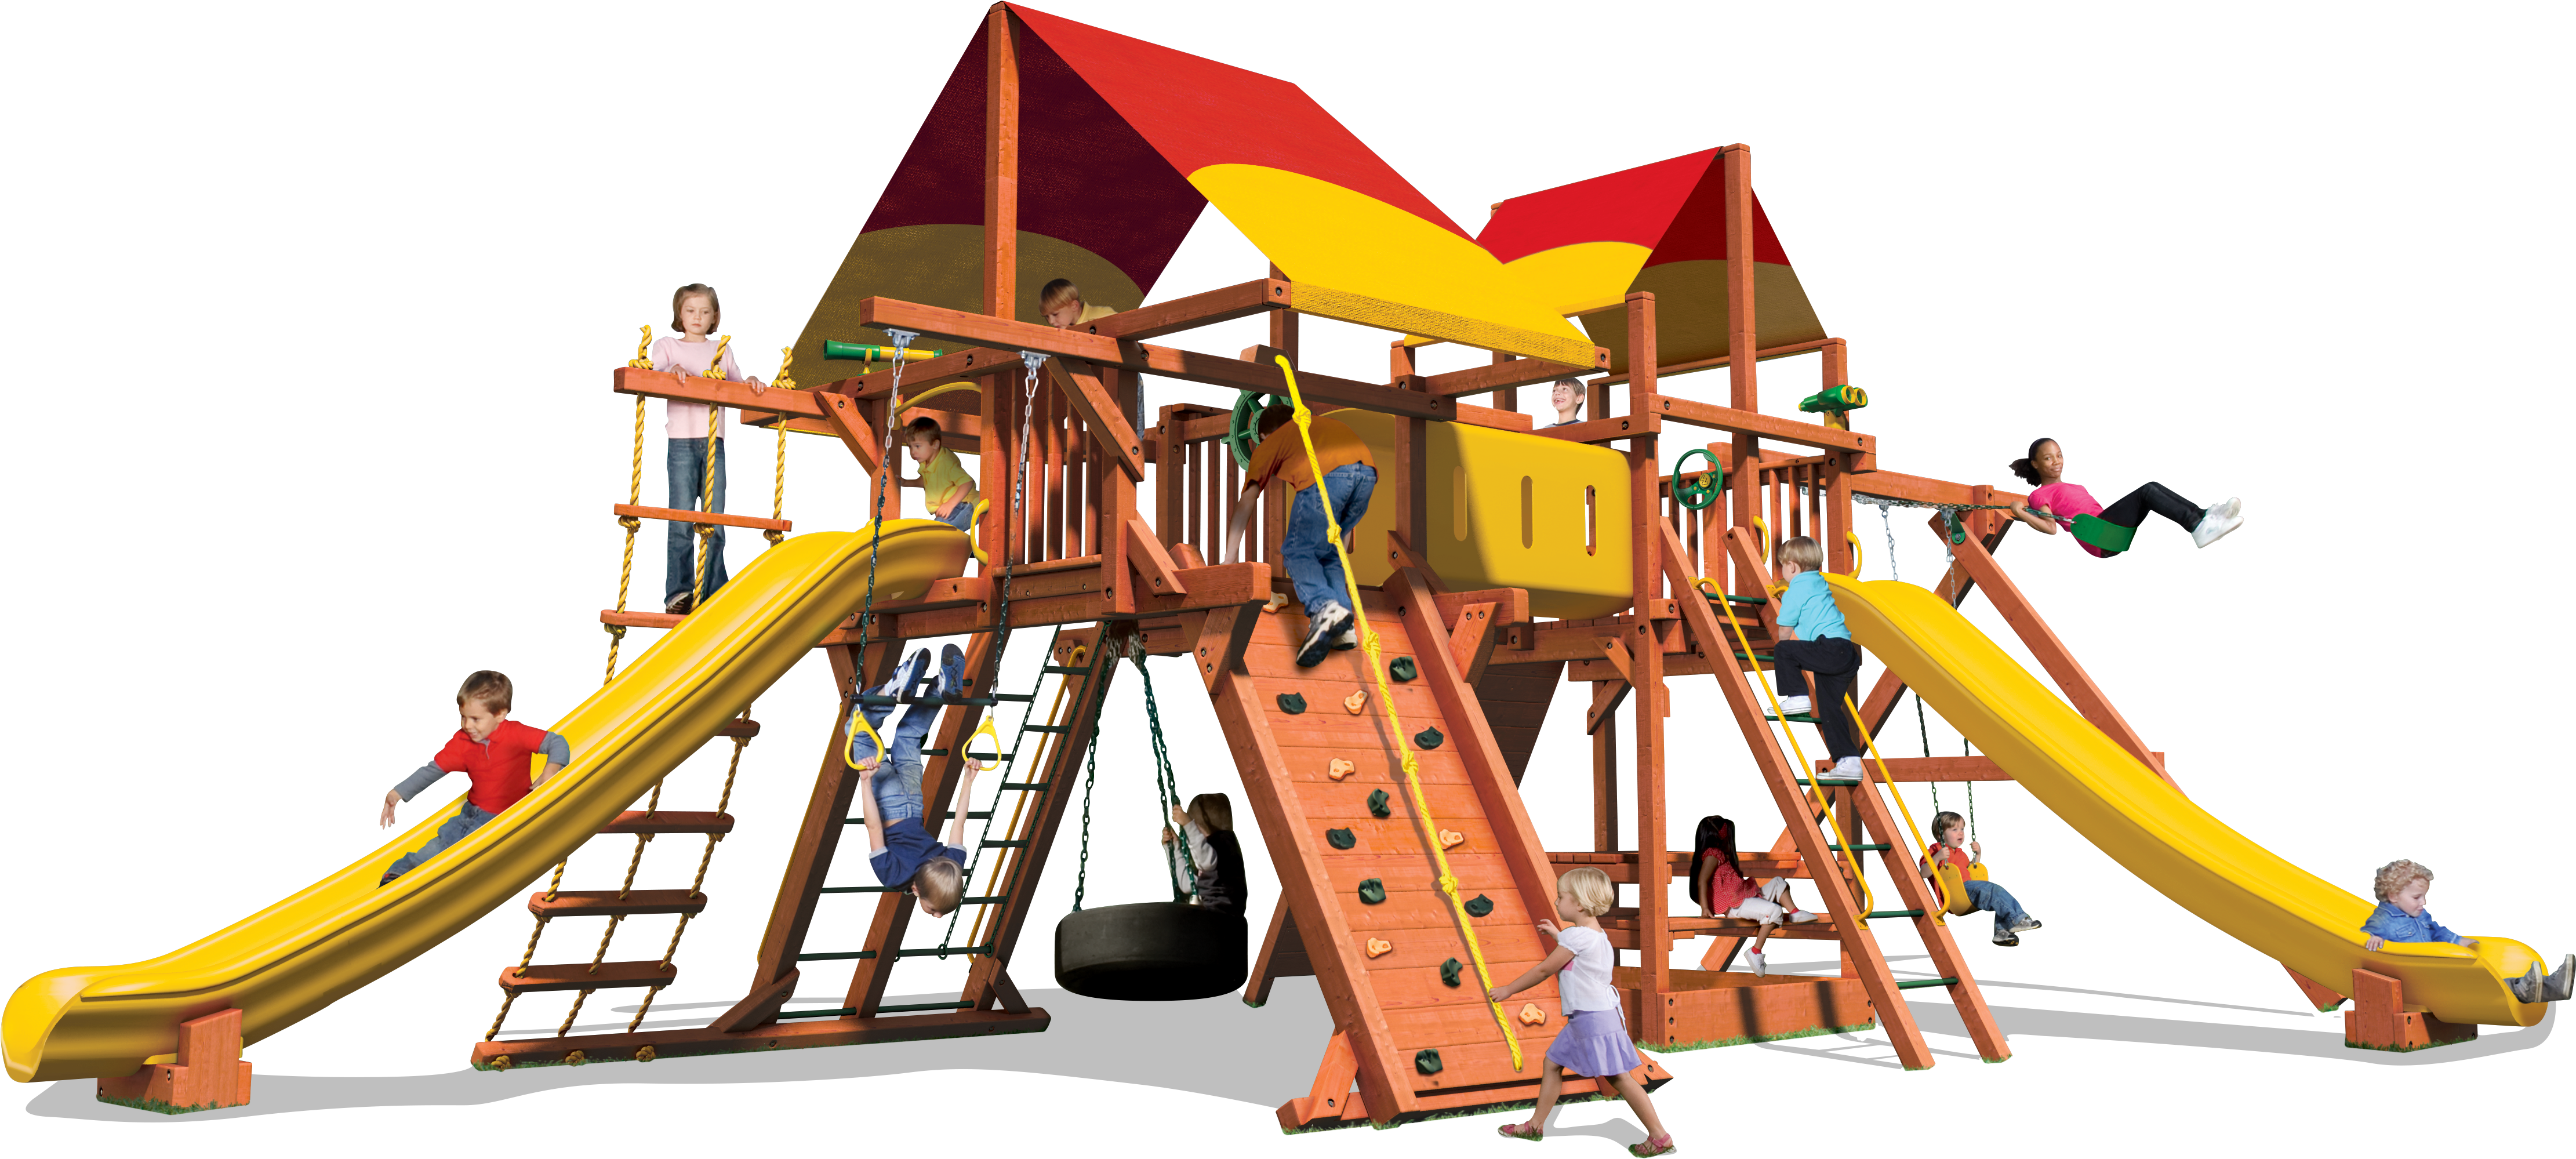 Outdoor Playsets - Playground Slide (4517x2059)